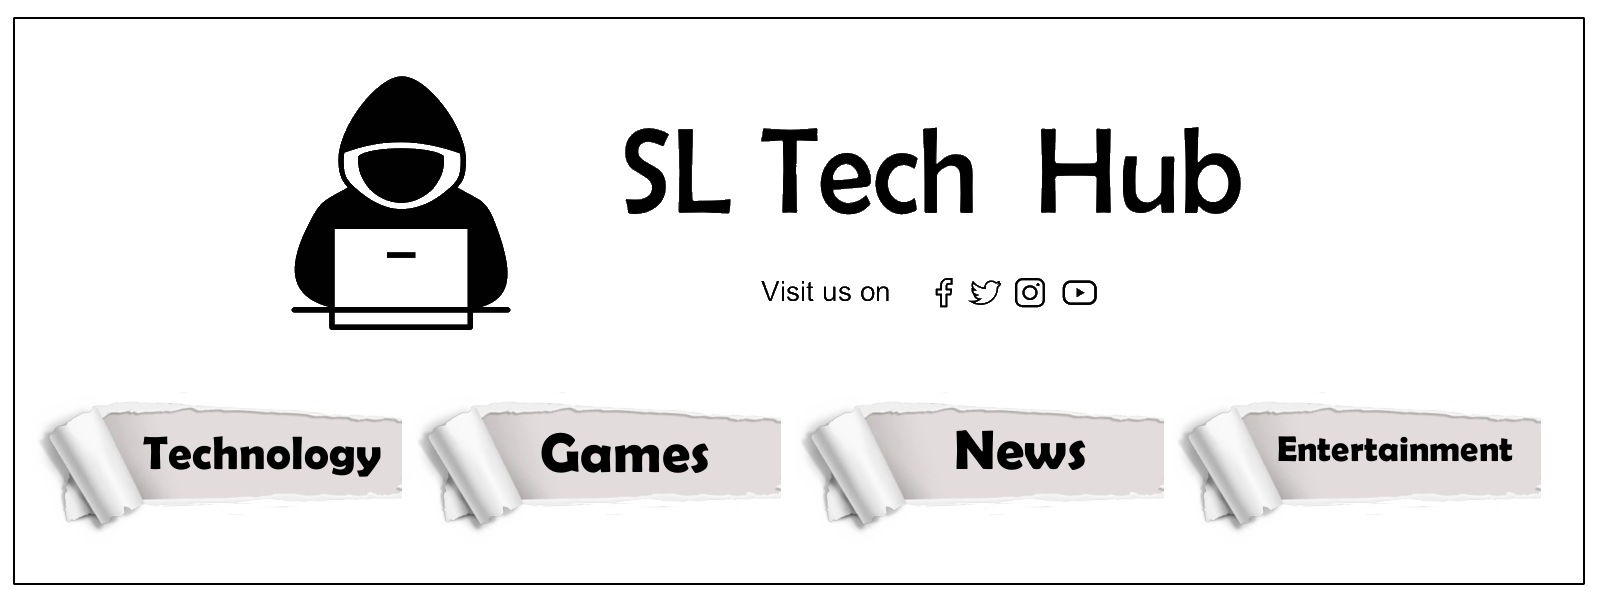 SL Tech Hub